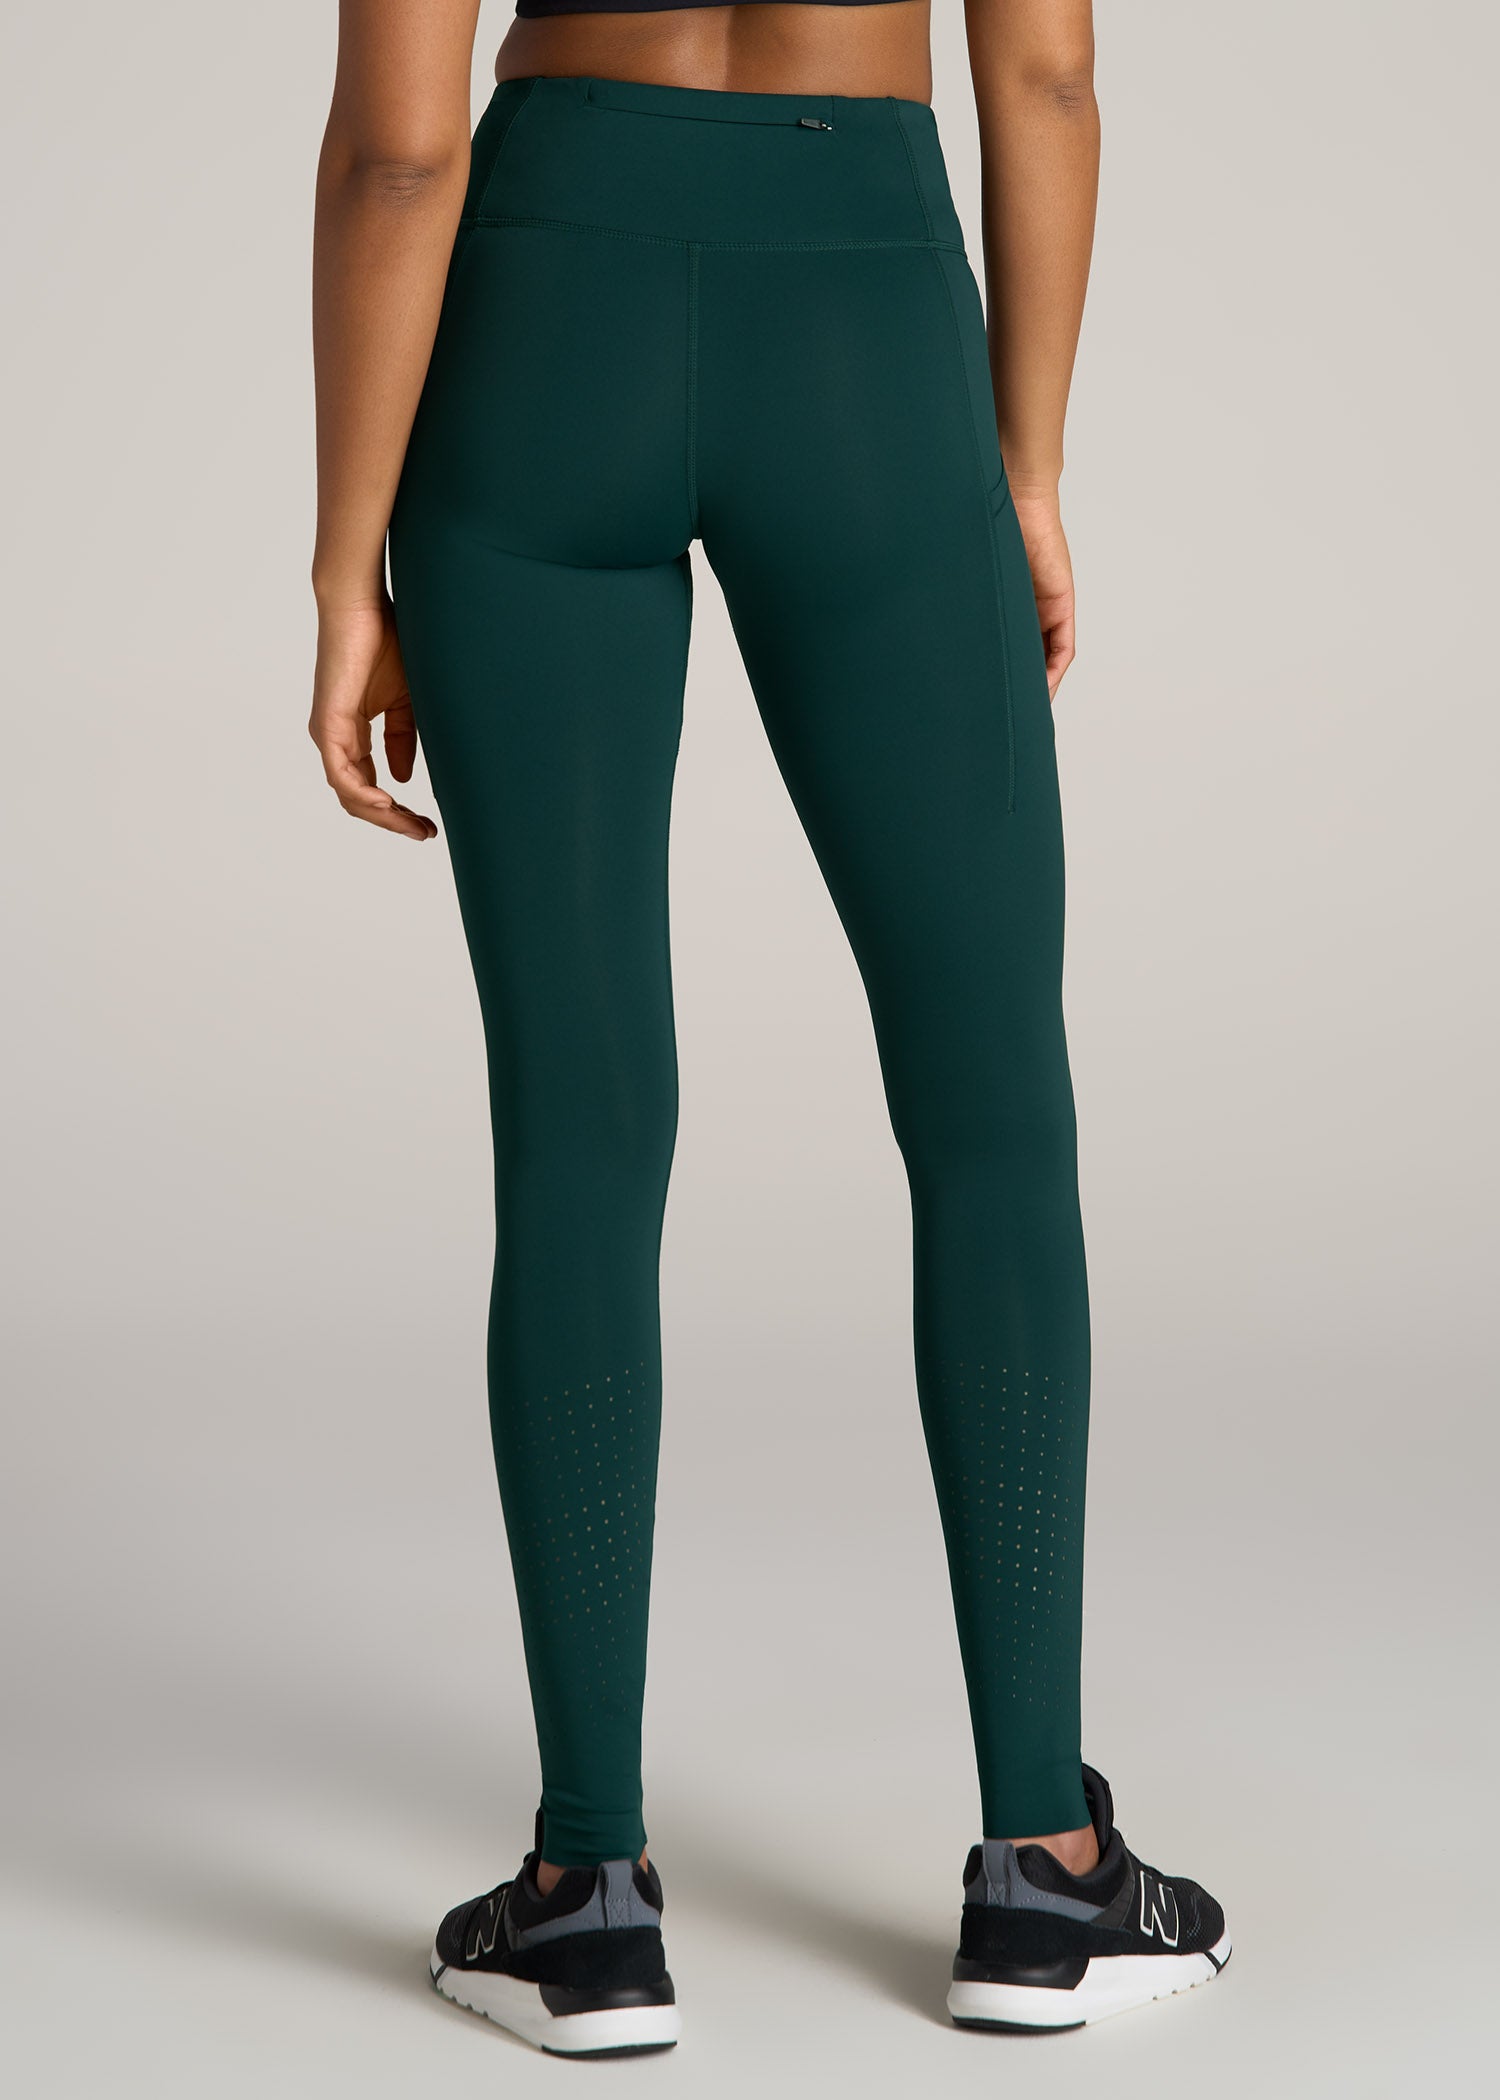 Mid Rise Run Legging for Tall Women Emerald